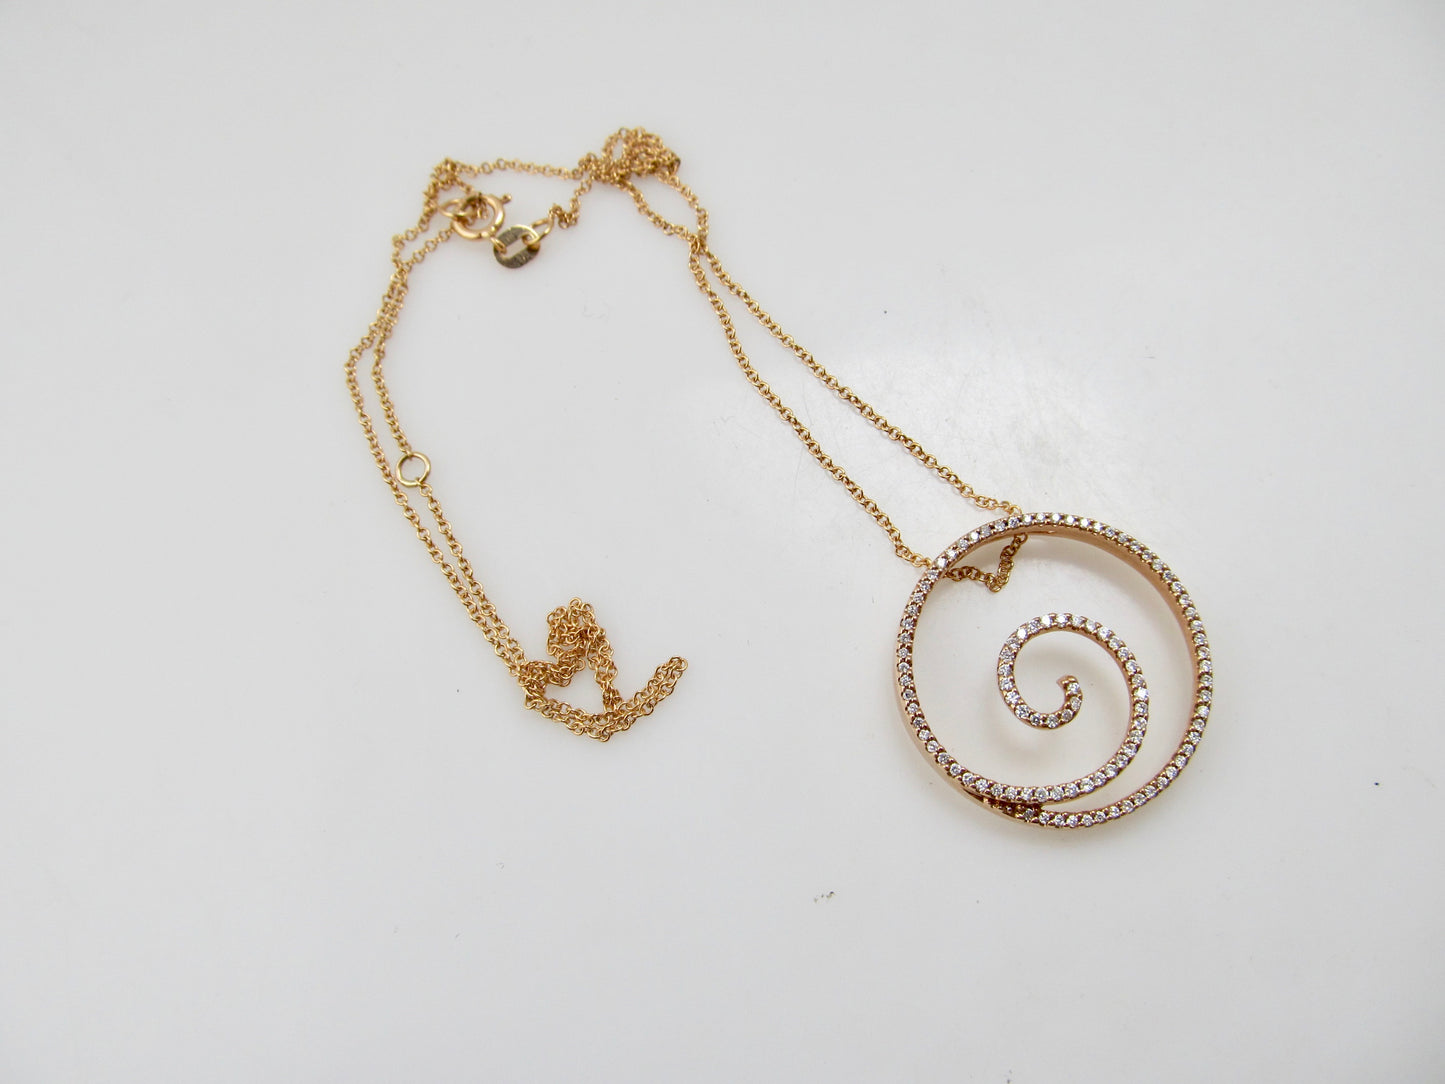 Rose gold diamond spiral necklace